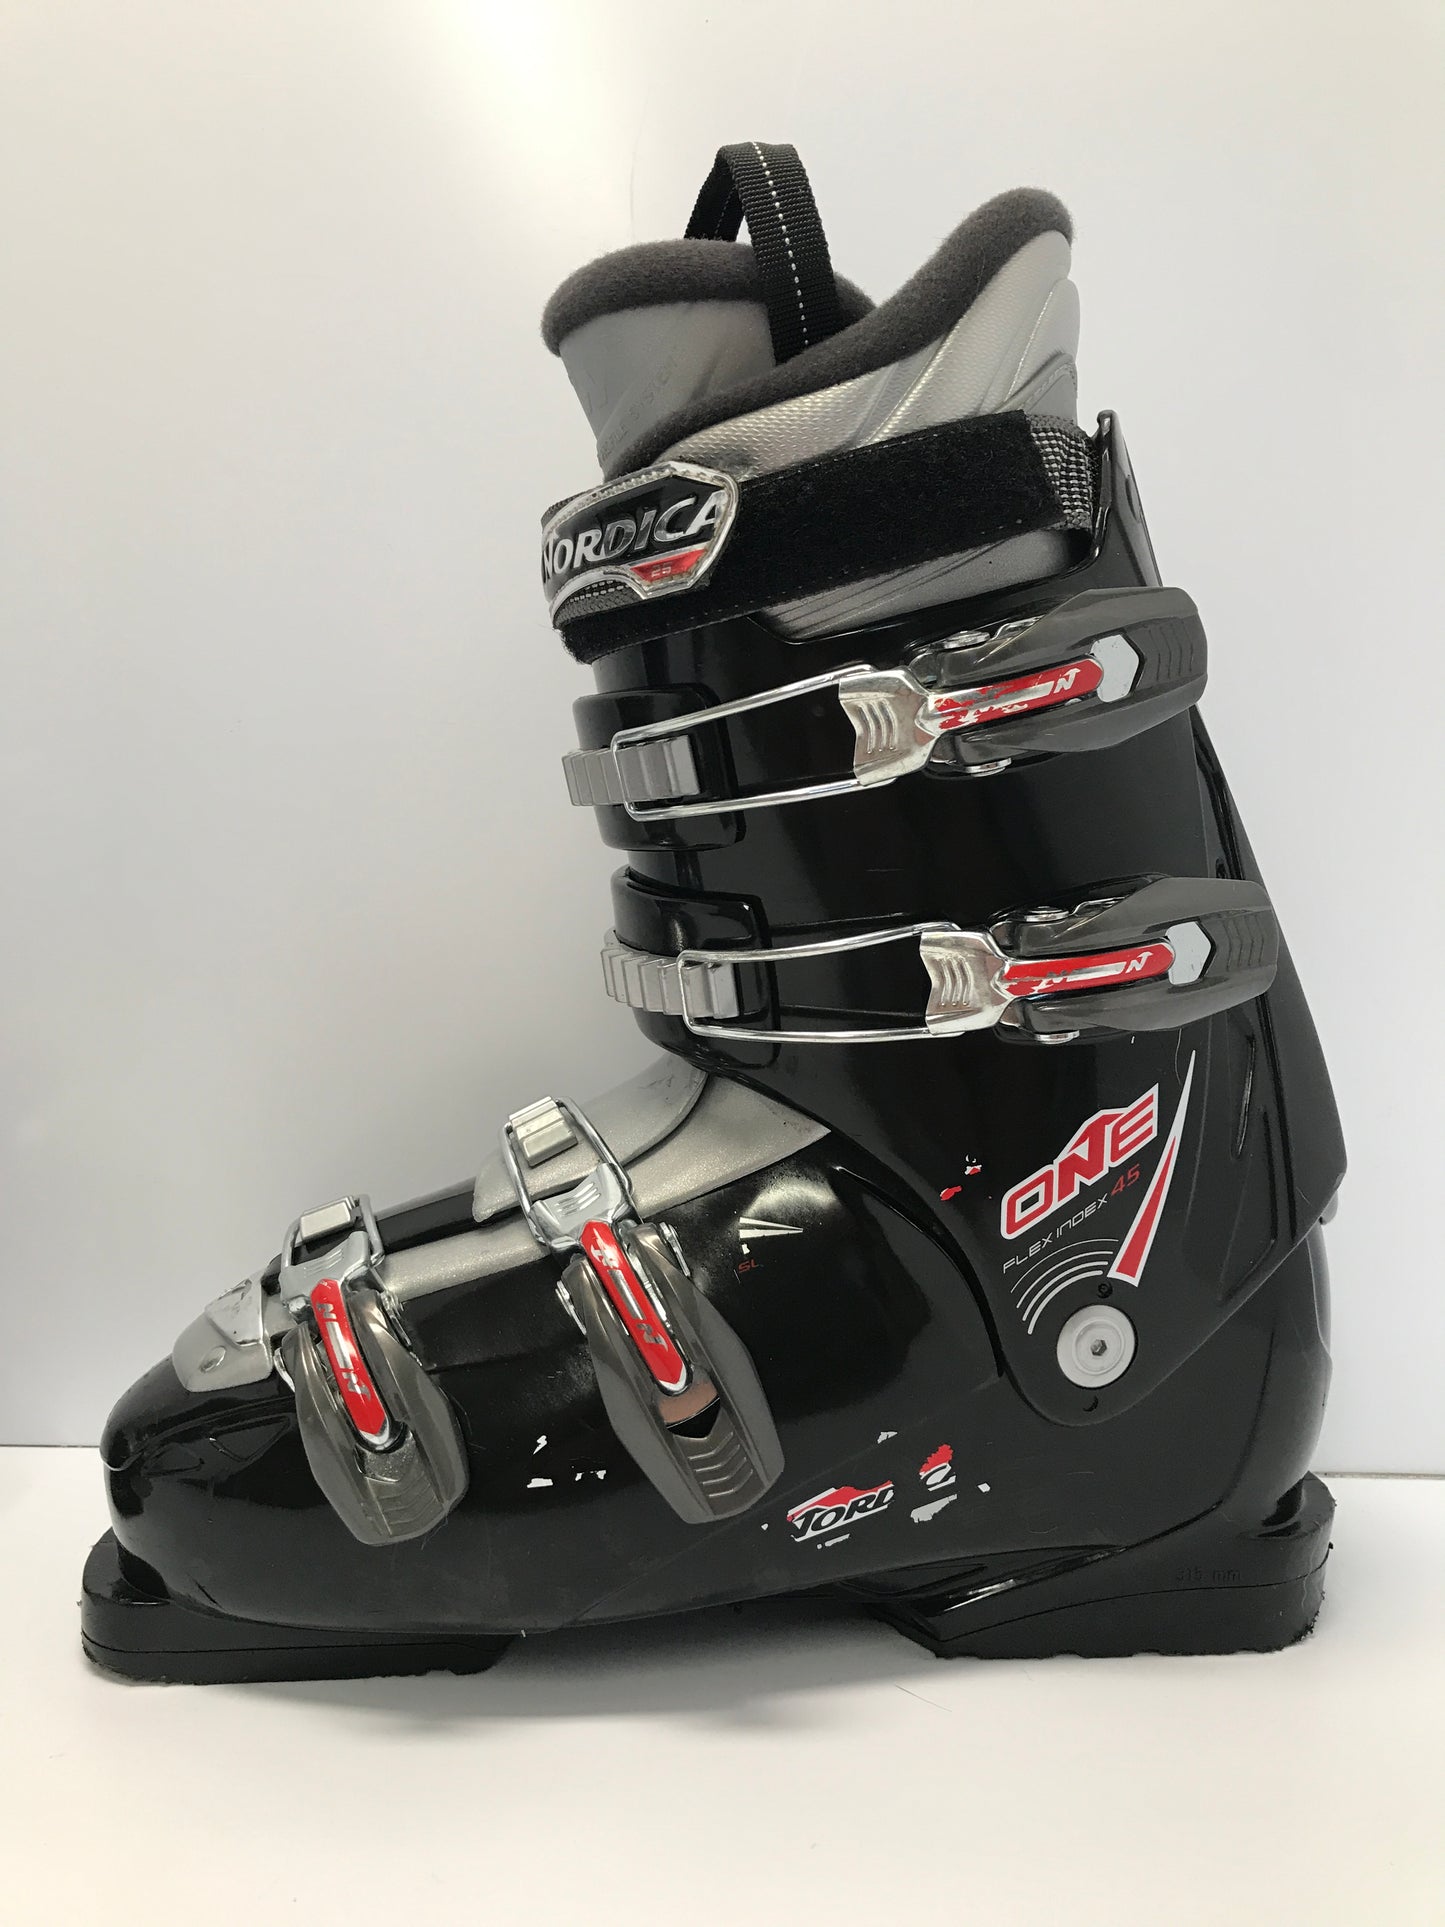 Ski Boots Mondo Size 27.5 Men's Size 7.5 Ladies 7 Size 8.5 315 mm Nordica Black Grey Red Like New